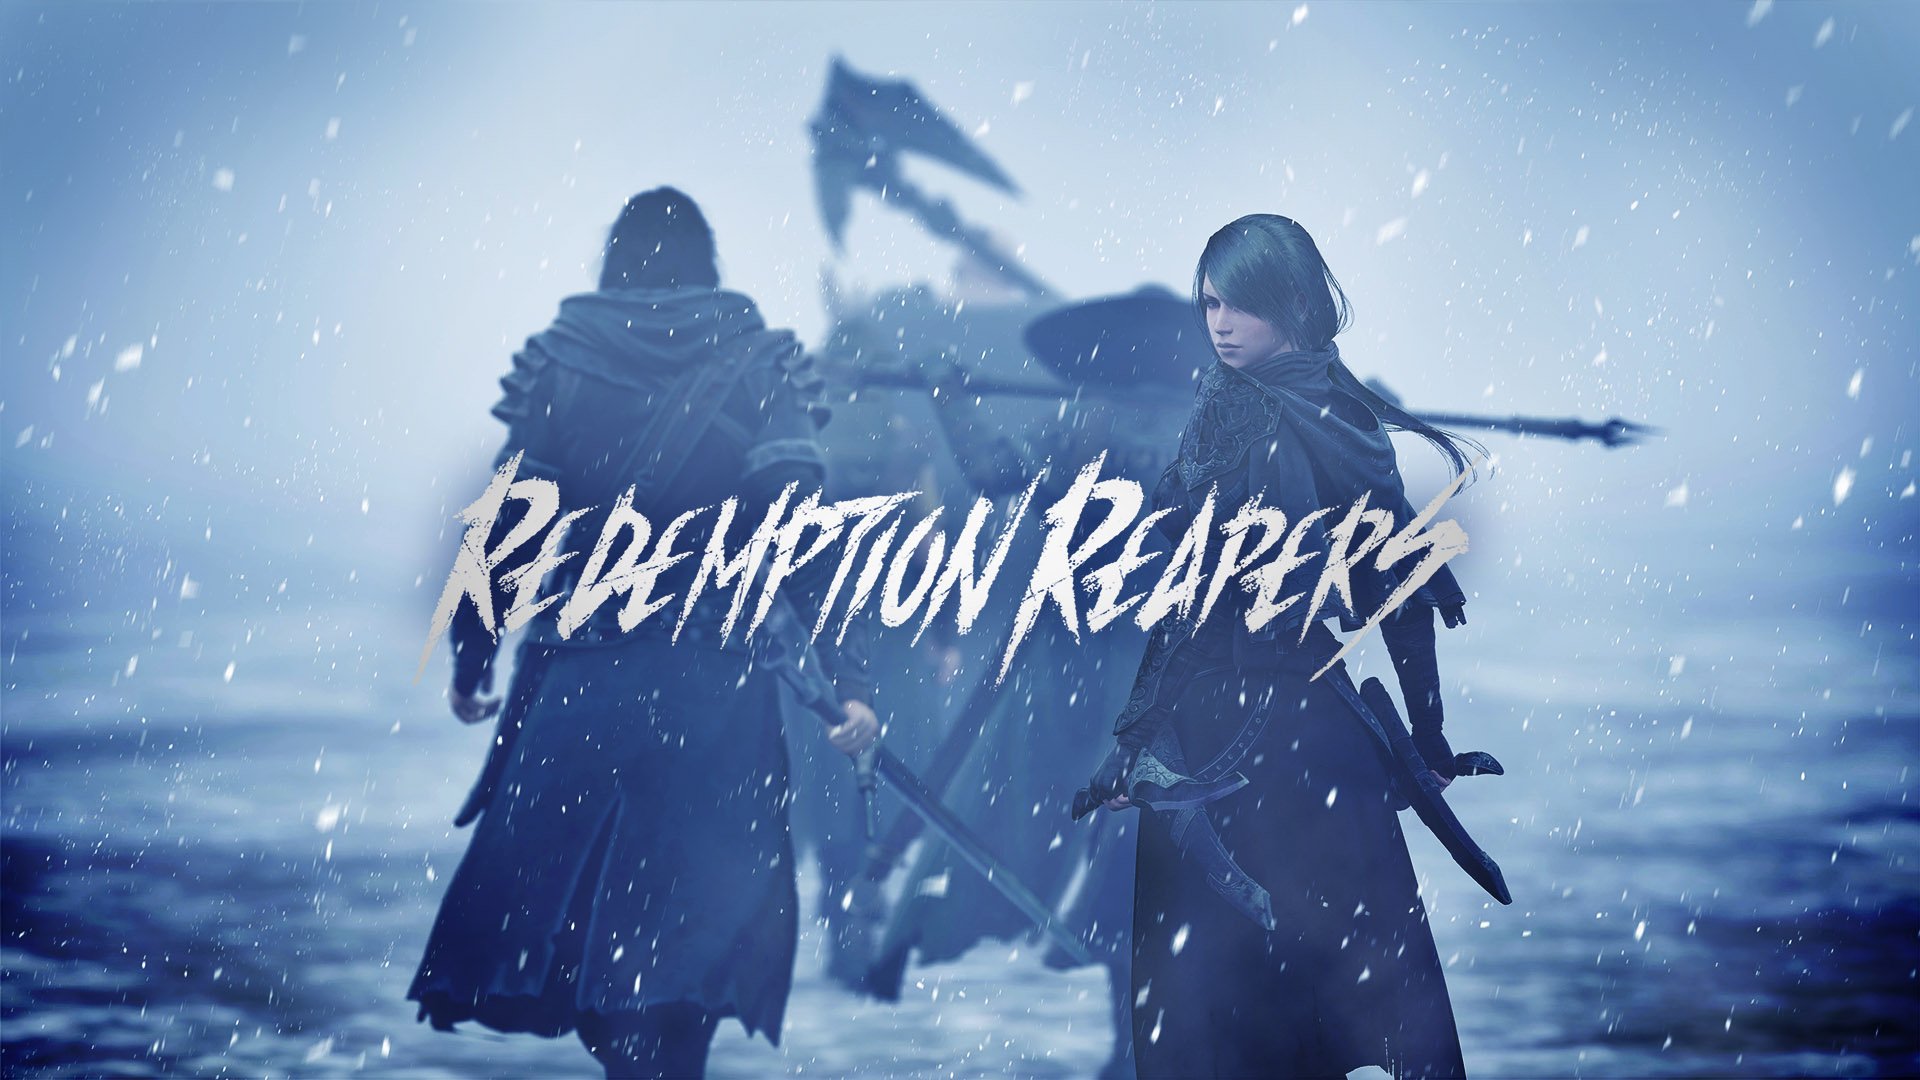 Binary Haze Interactive 和 Adglobe 宣布策略角色扮演游戏 Redemption Reapers 适用于 PS4、Switch 和 PC